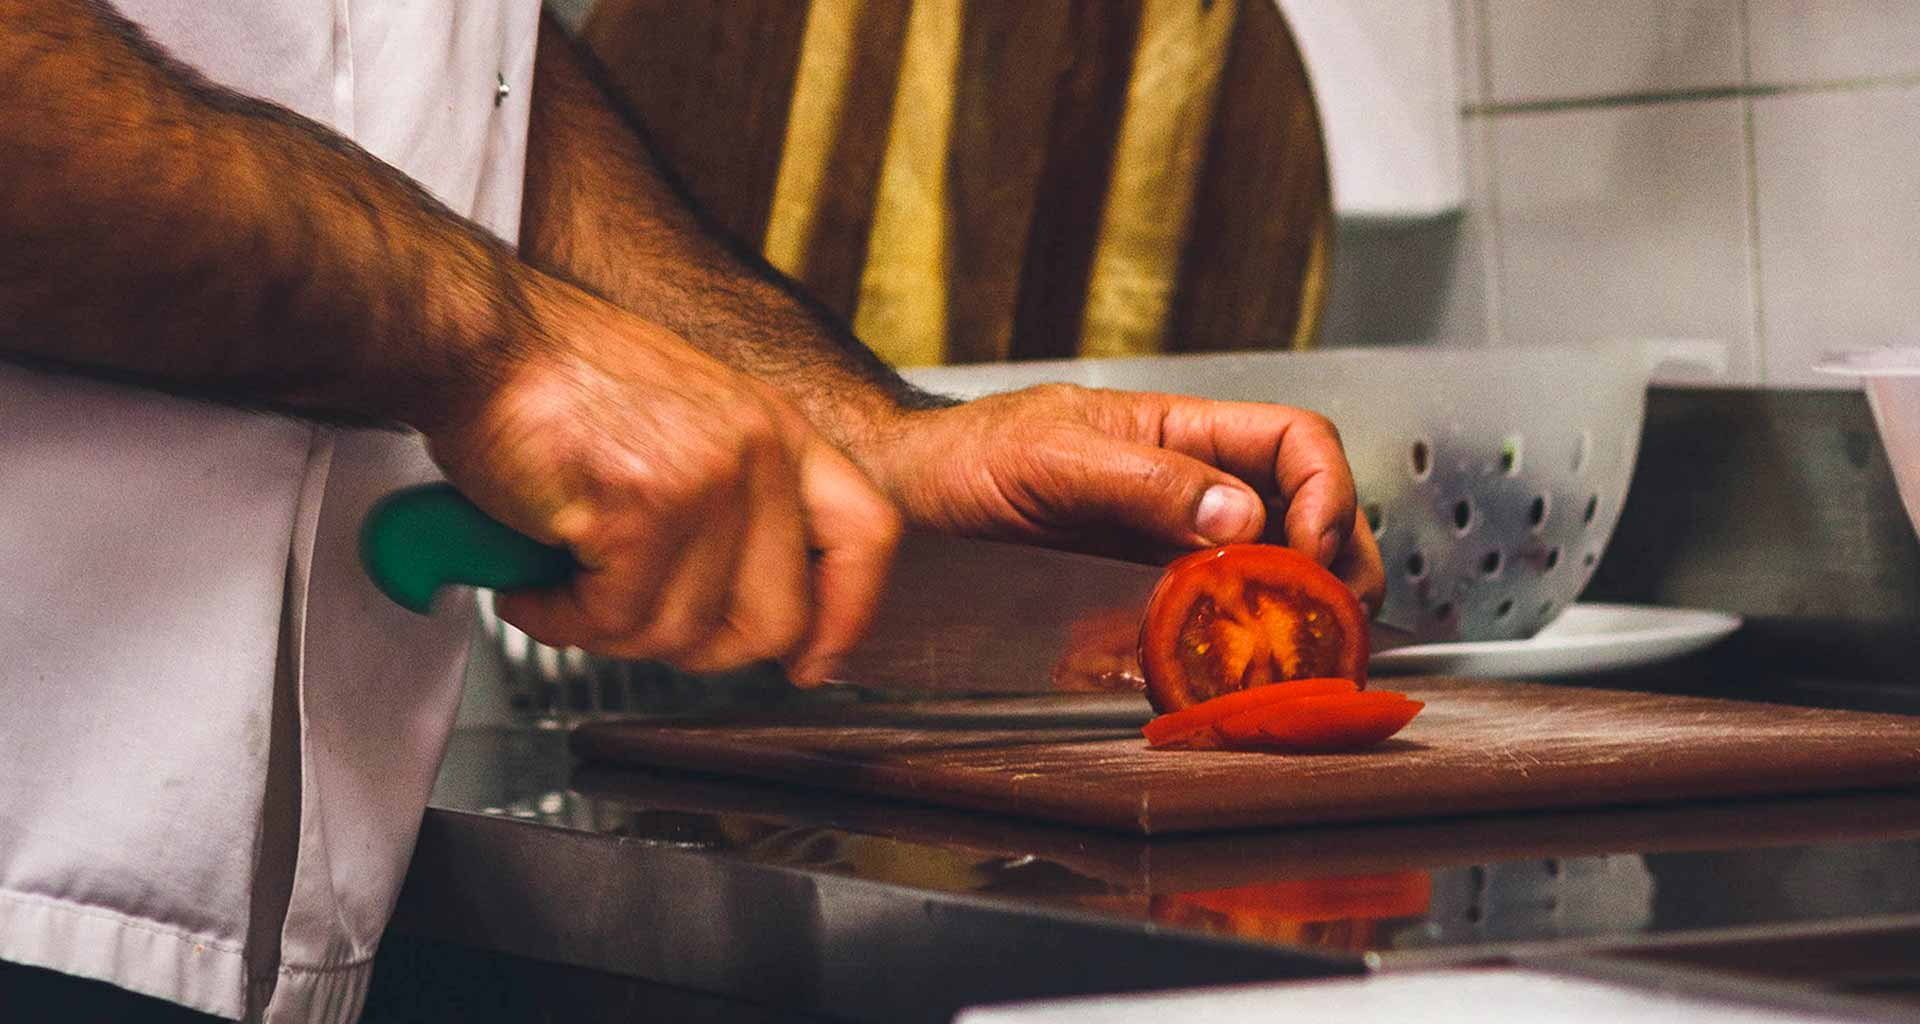 Chef slicing a tomoato.